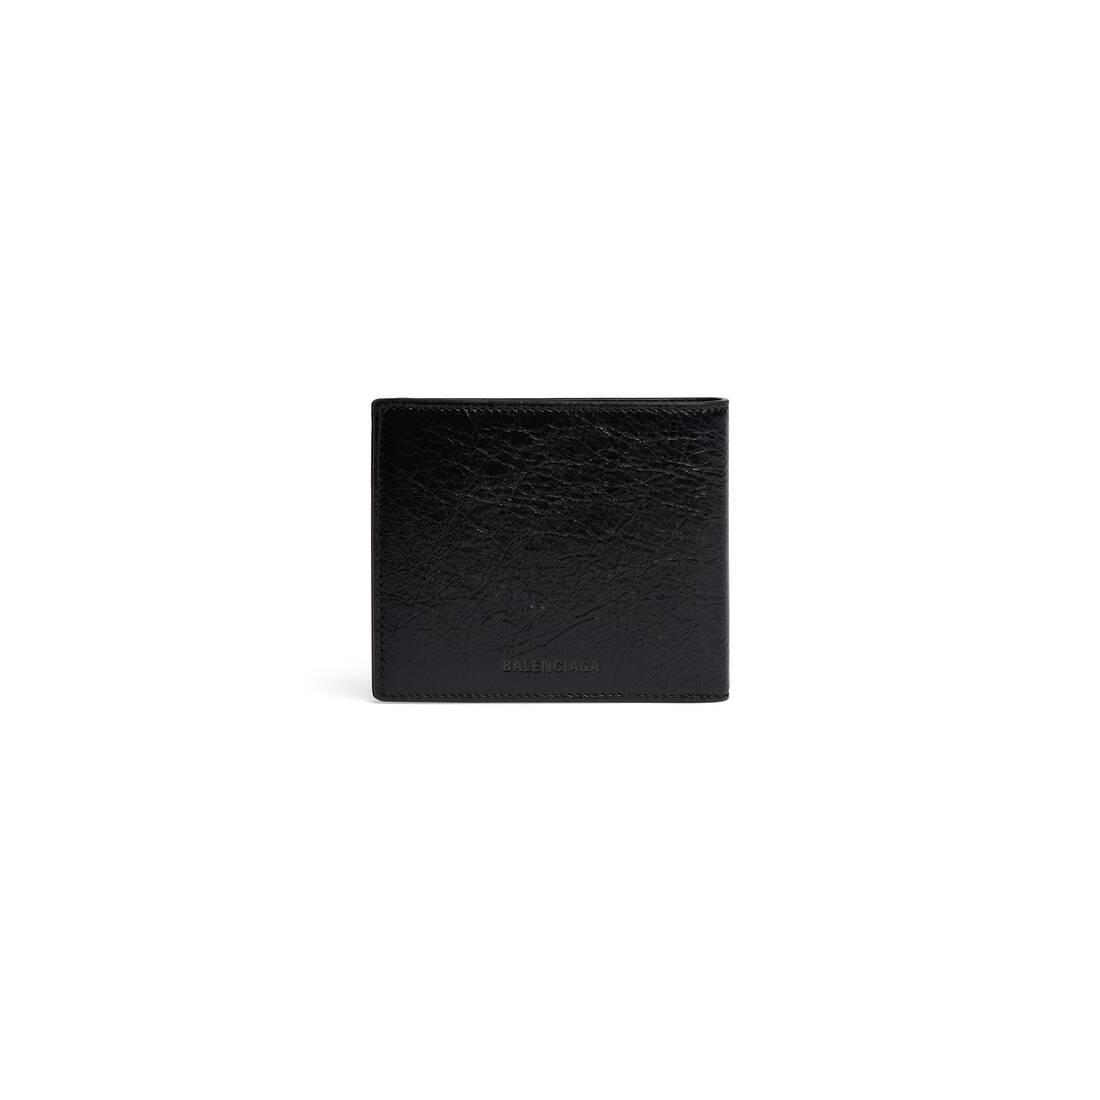 Men's Embossed Monogram Square Folded Wallet Box in Dark Grey